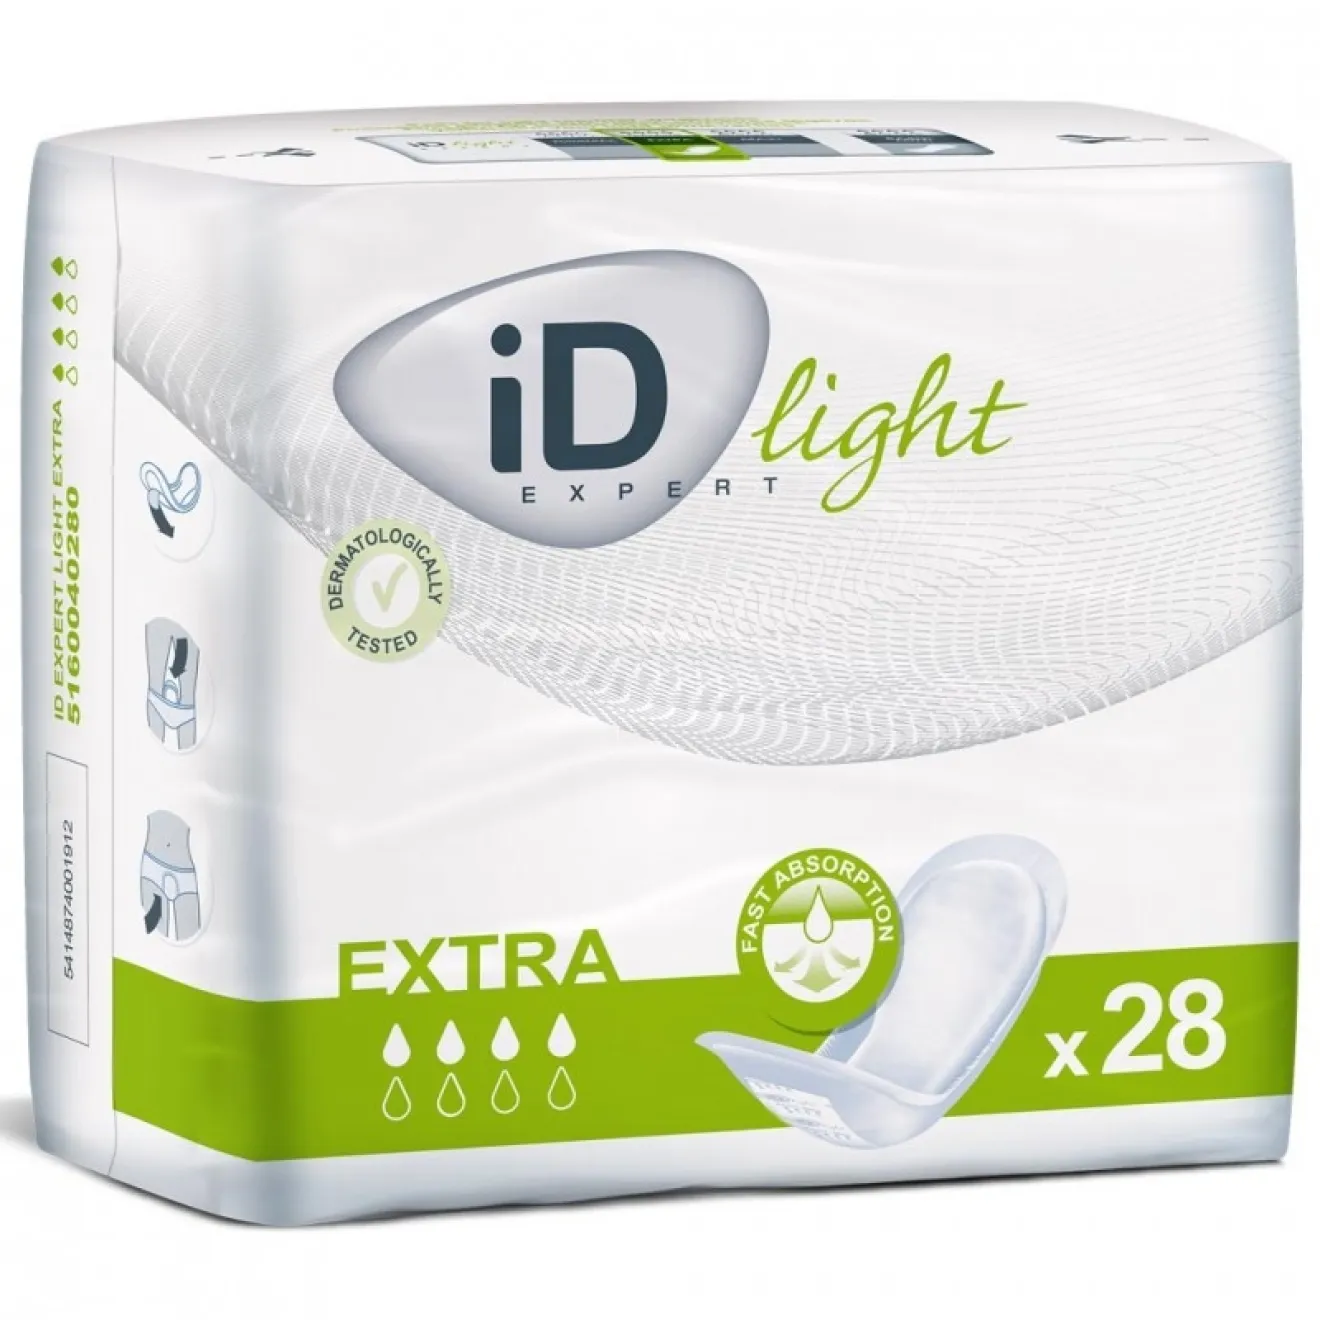 ID Expert light extra 10x28 ST